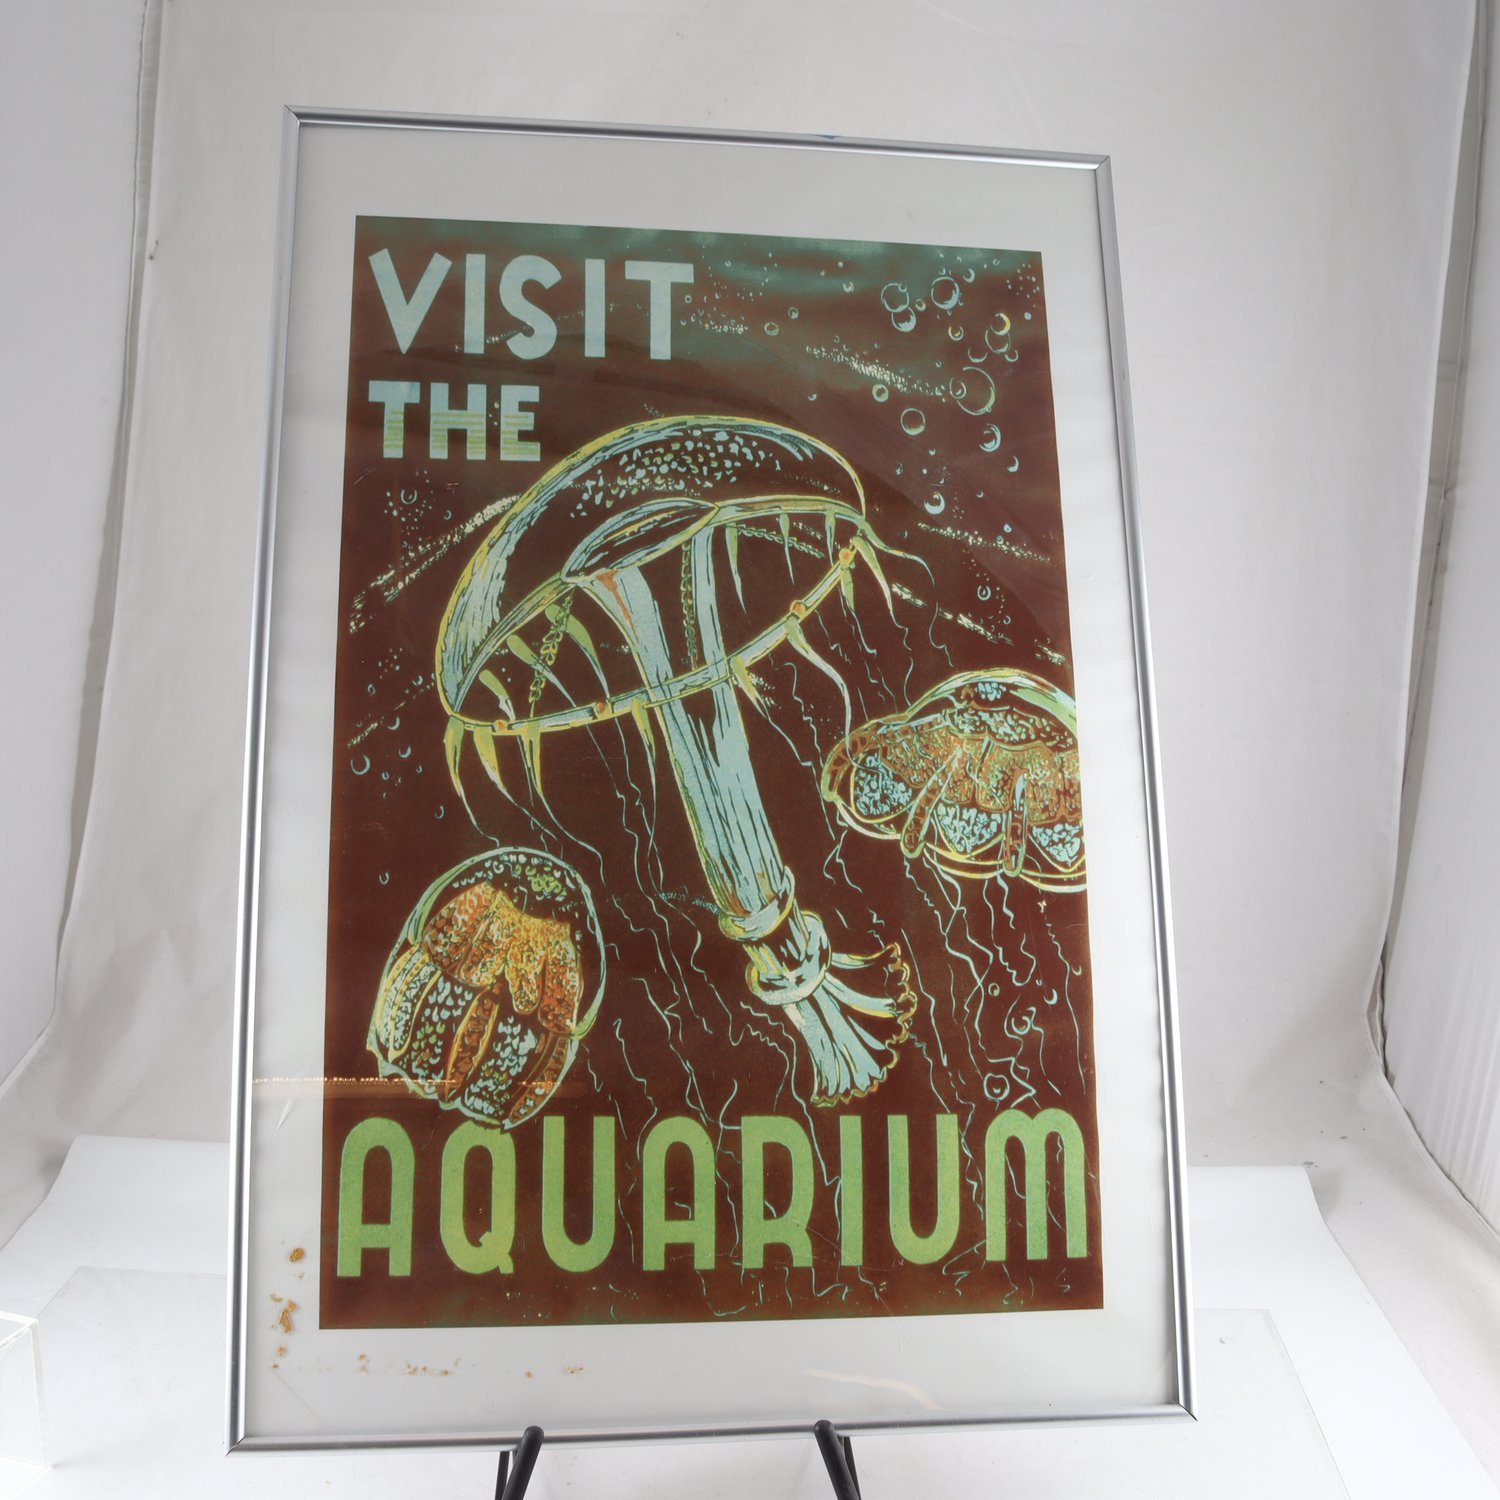 Affisch, Visit the aquarium, Hugh Stevenson, Endast avhämtning